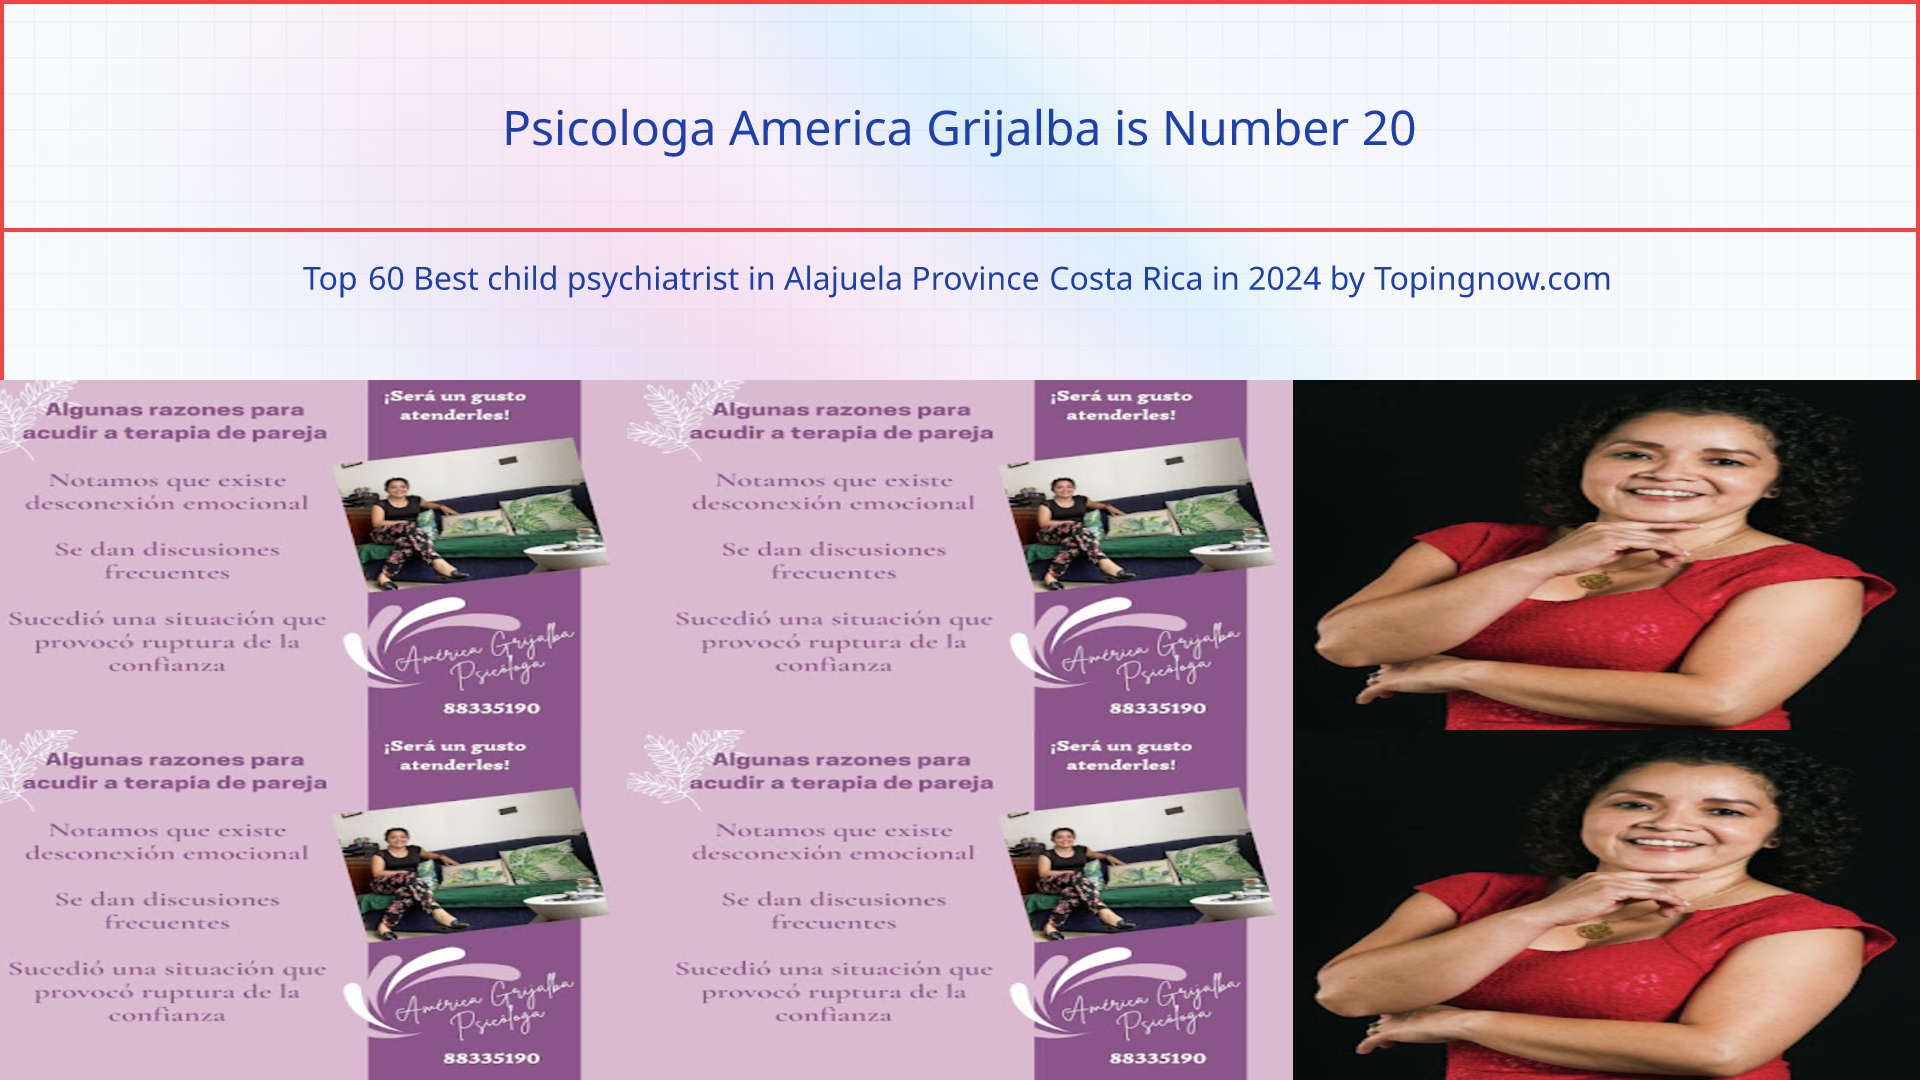 Psicologa America Grijalba: Top 60 Best child psychiatrist in Alajuela Province Costa Rica in 2024